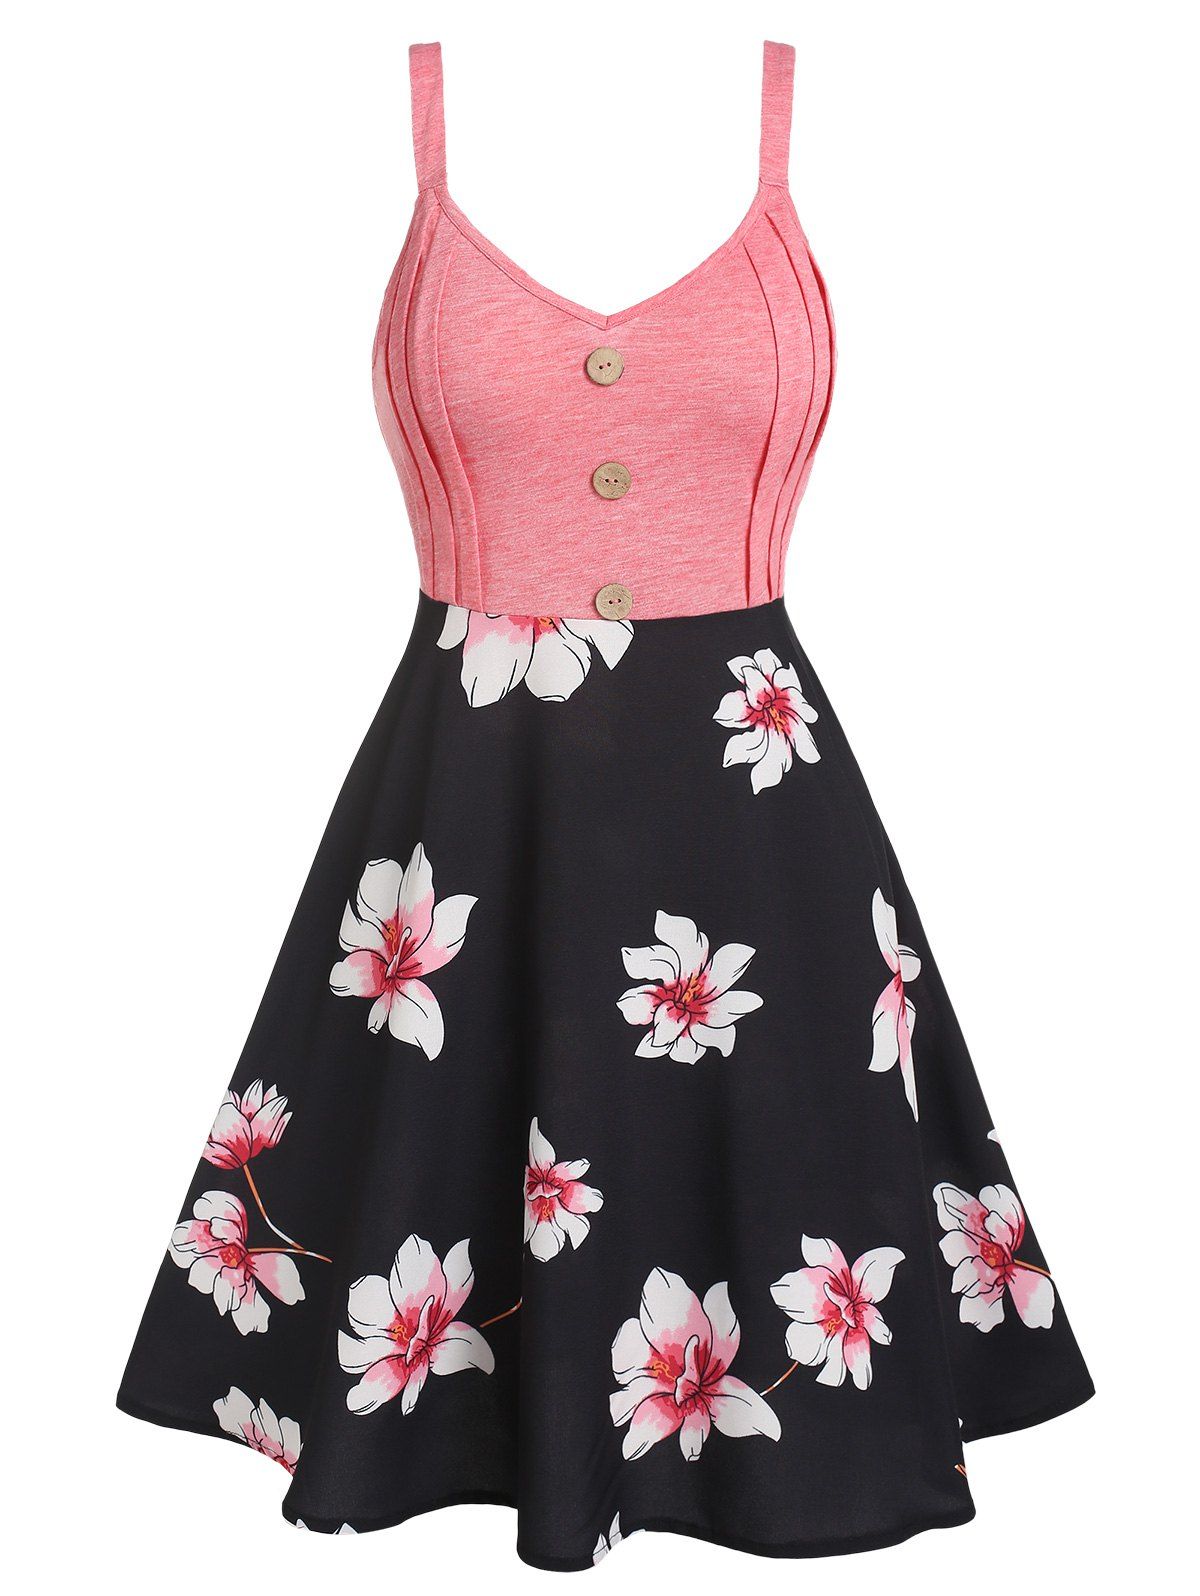 Floral Print Sundress Mock Button Mini Cami Dress - BLACK XL